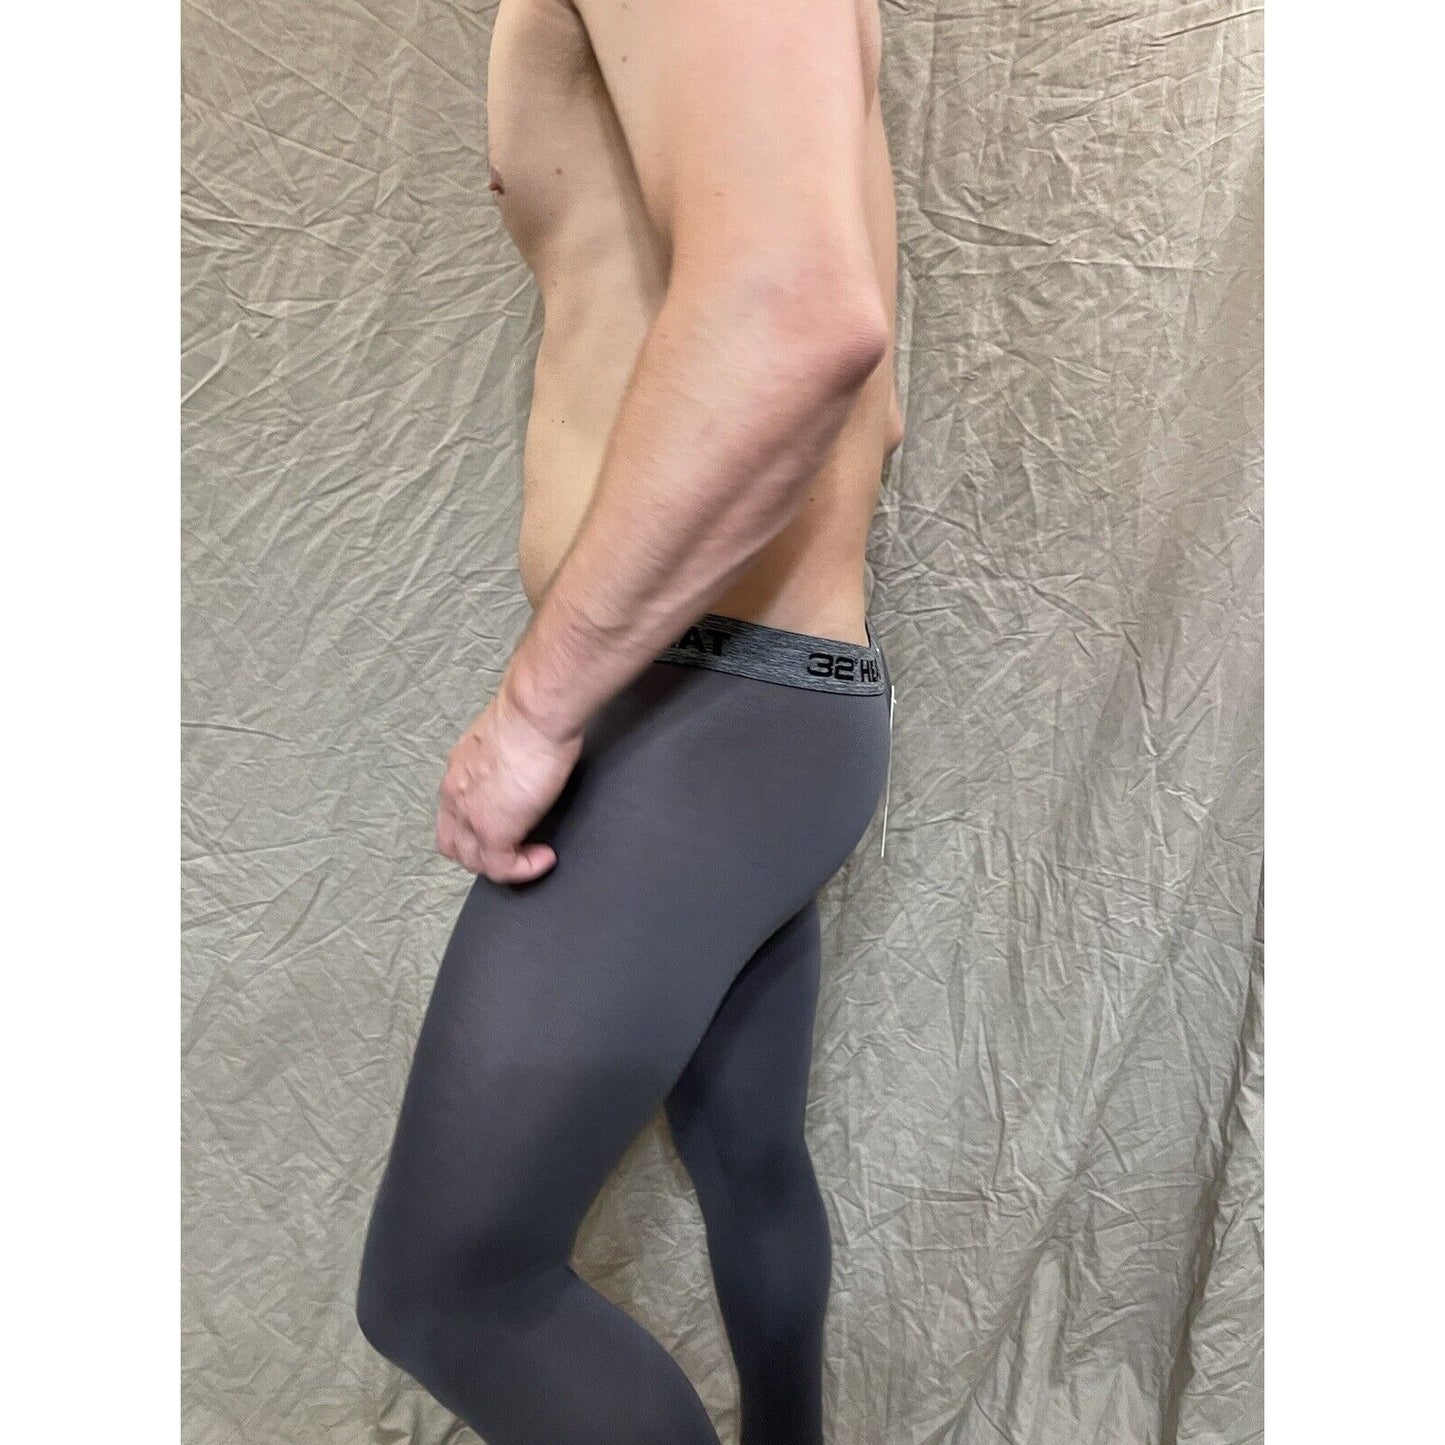 32 degree heat stingray gray compression leggings base layer long underwear small